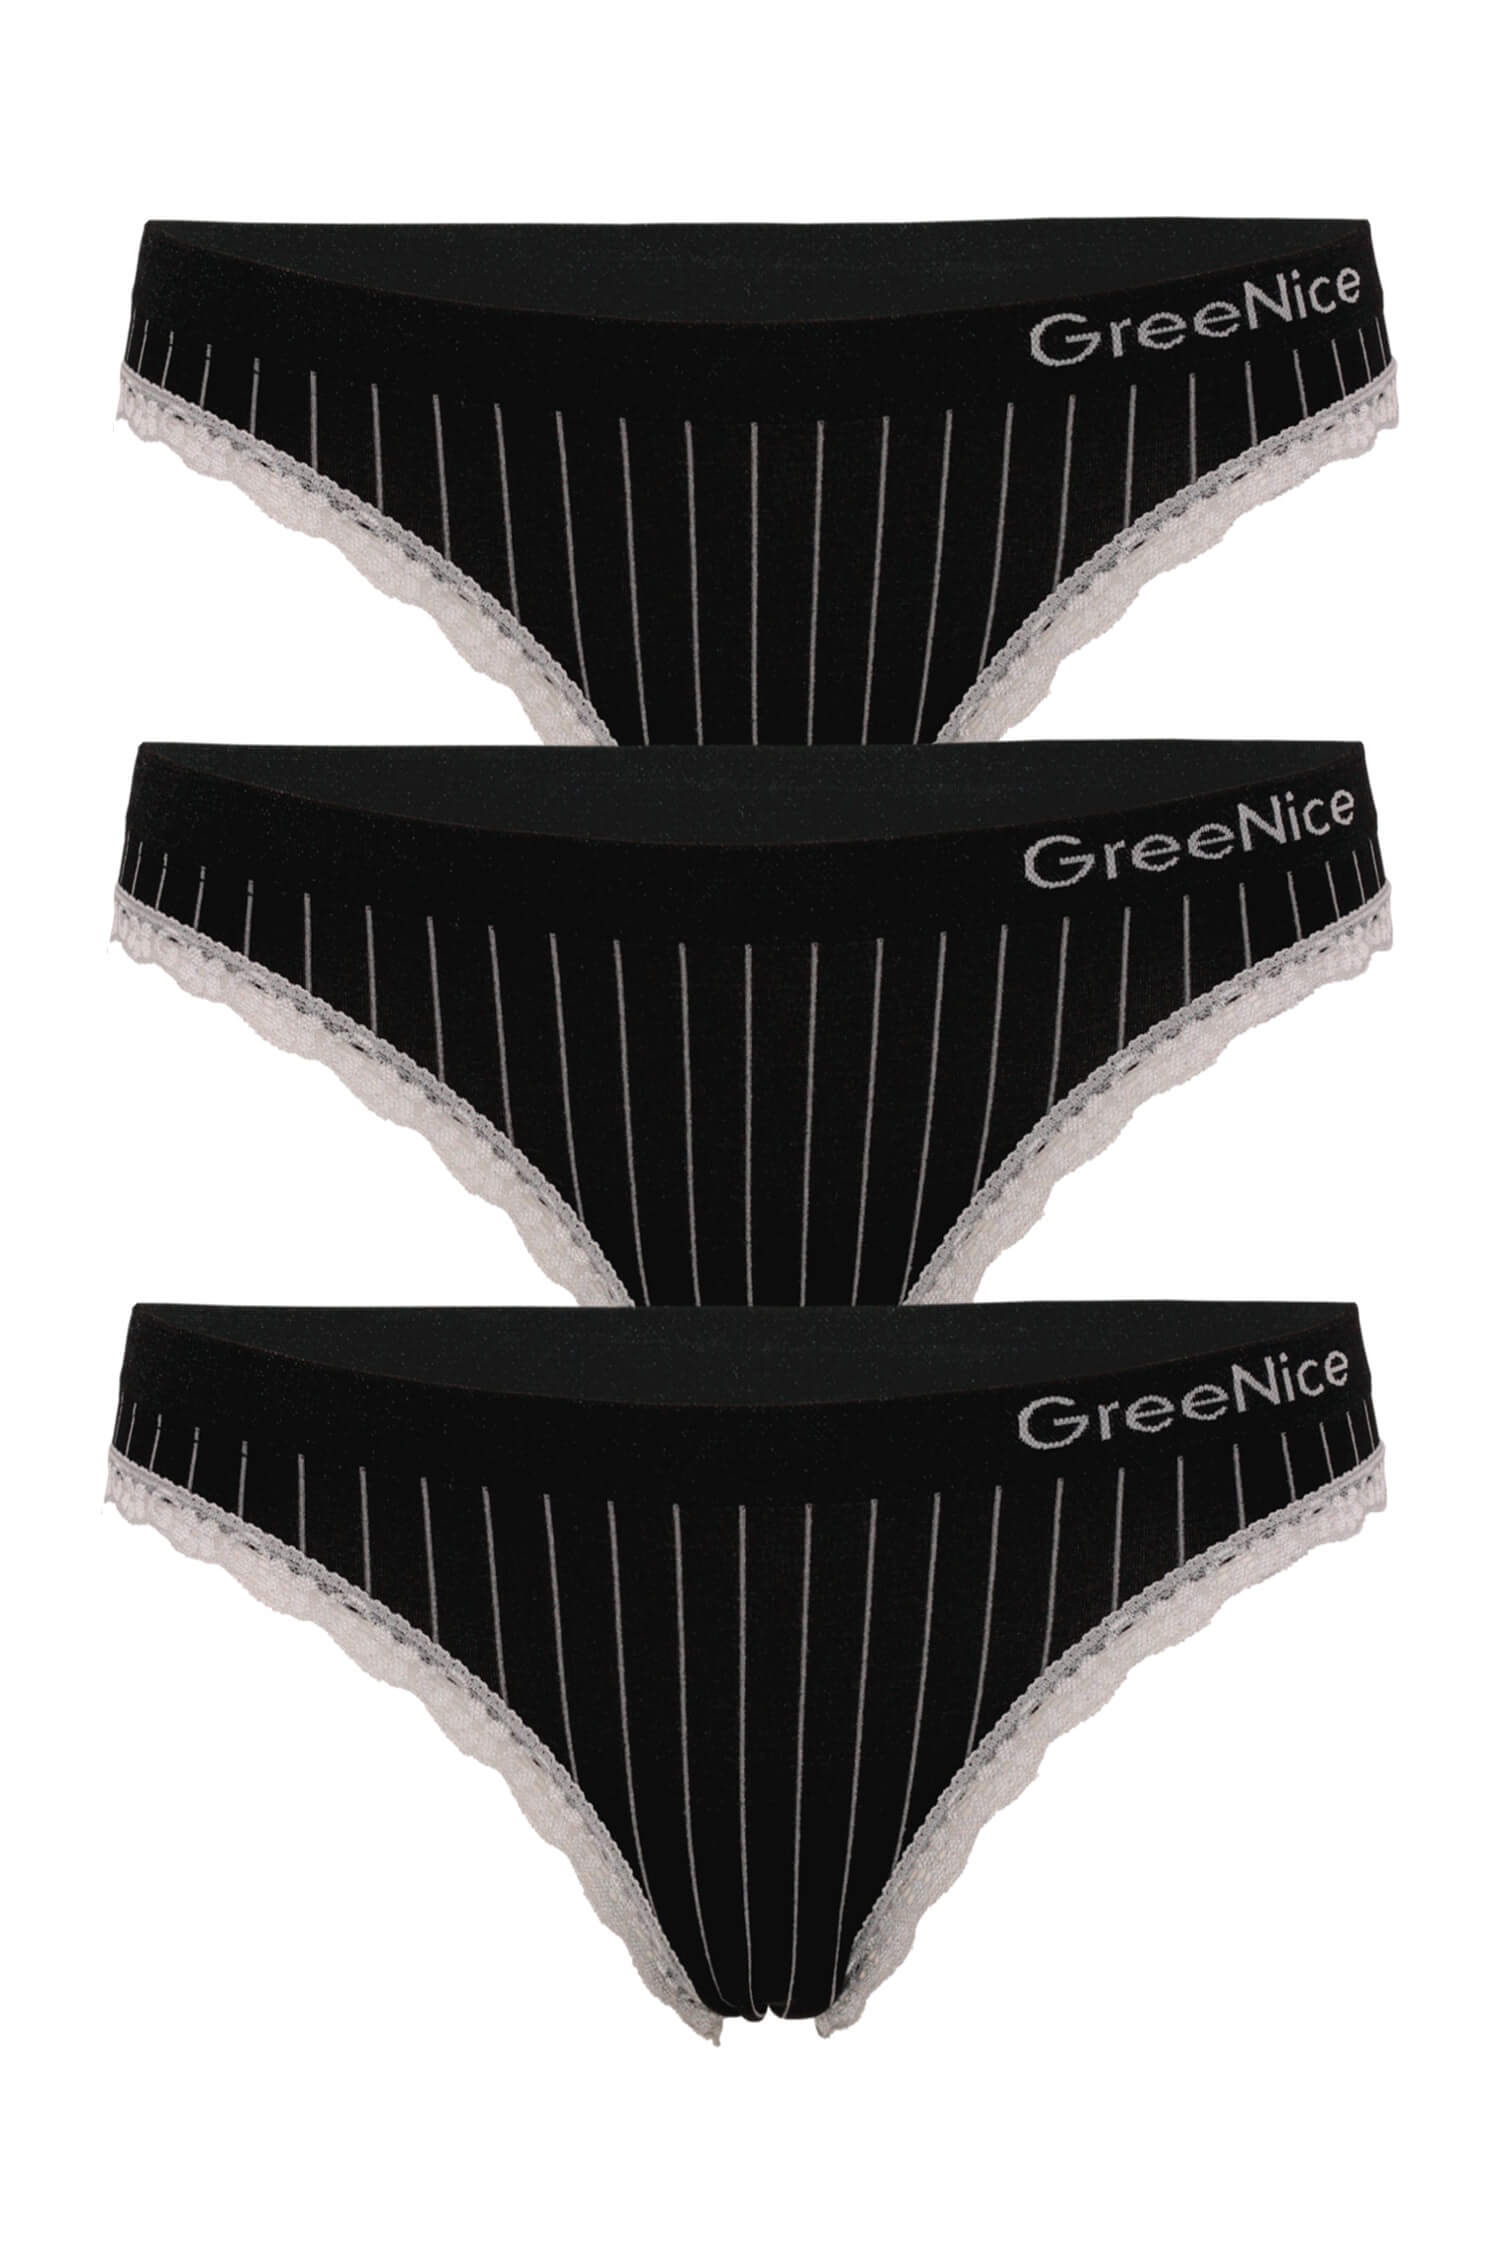 Azzy Greenice bikini sada 3 kusů kalhotek M černá